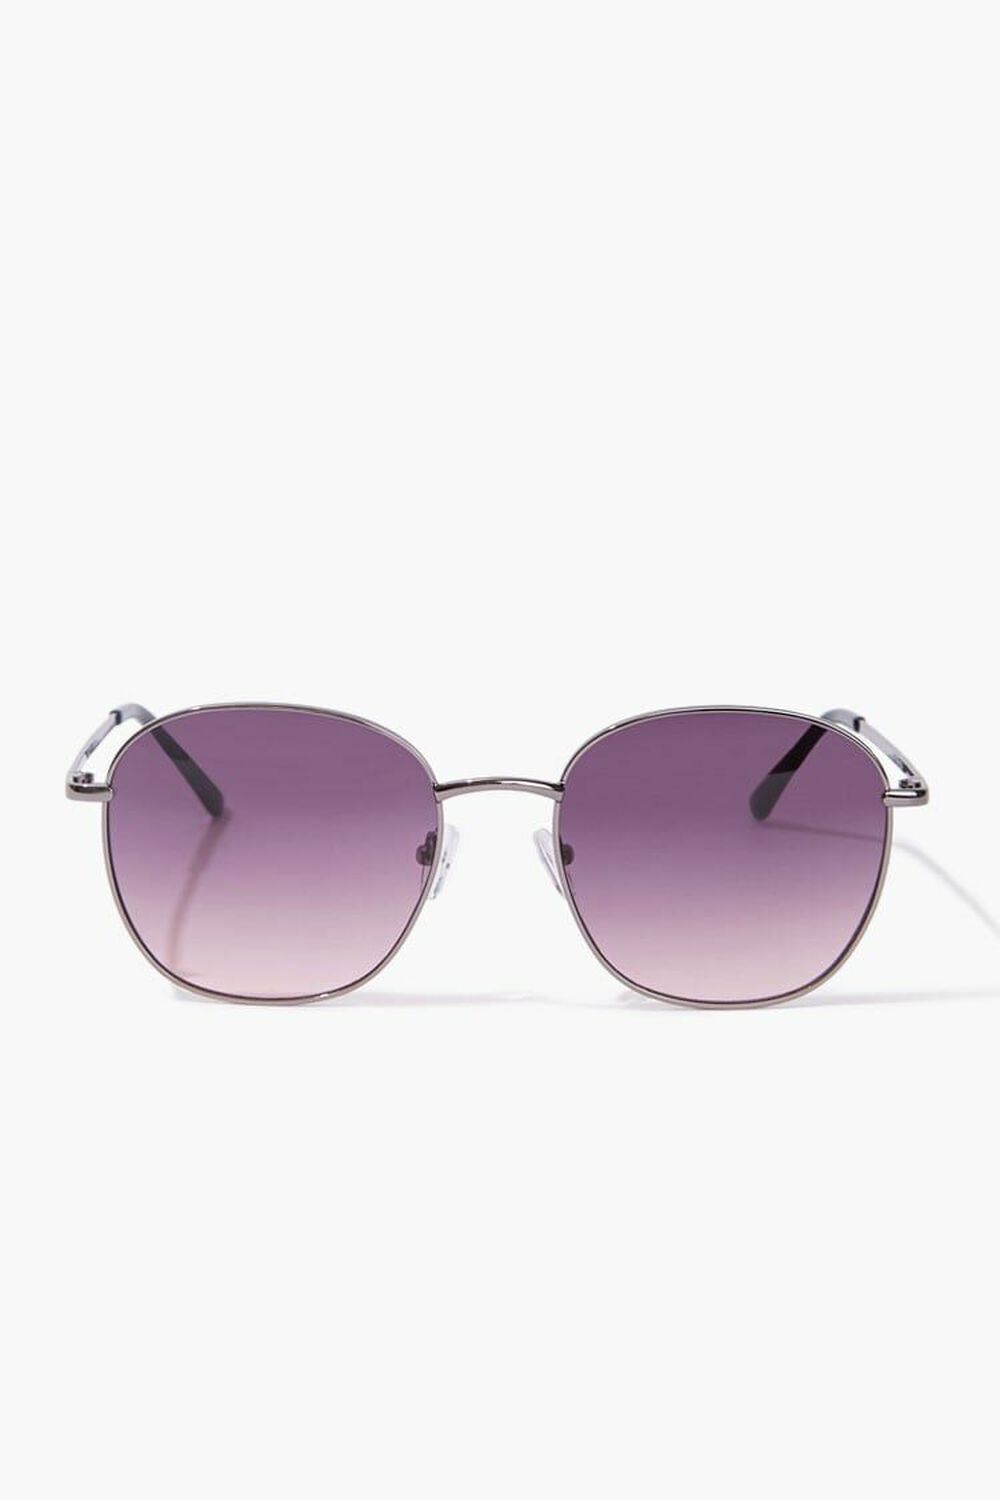 BLACK/MULTI Round Tinted Sunglasses, image 1